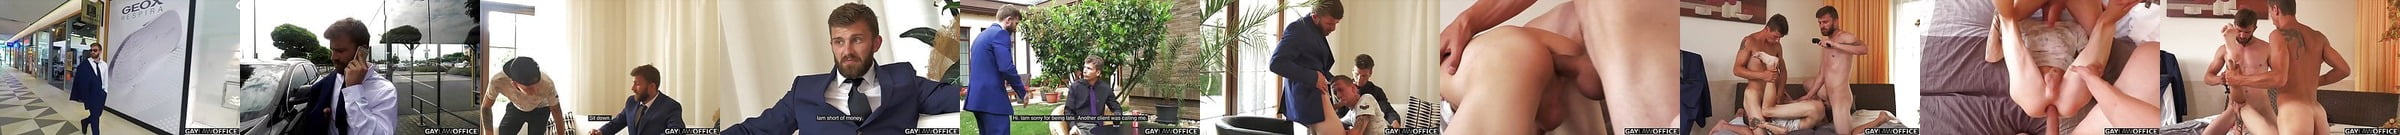 Gay Law Office Porn Videos Xhamster